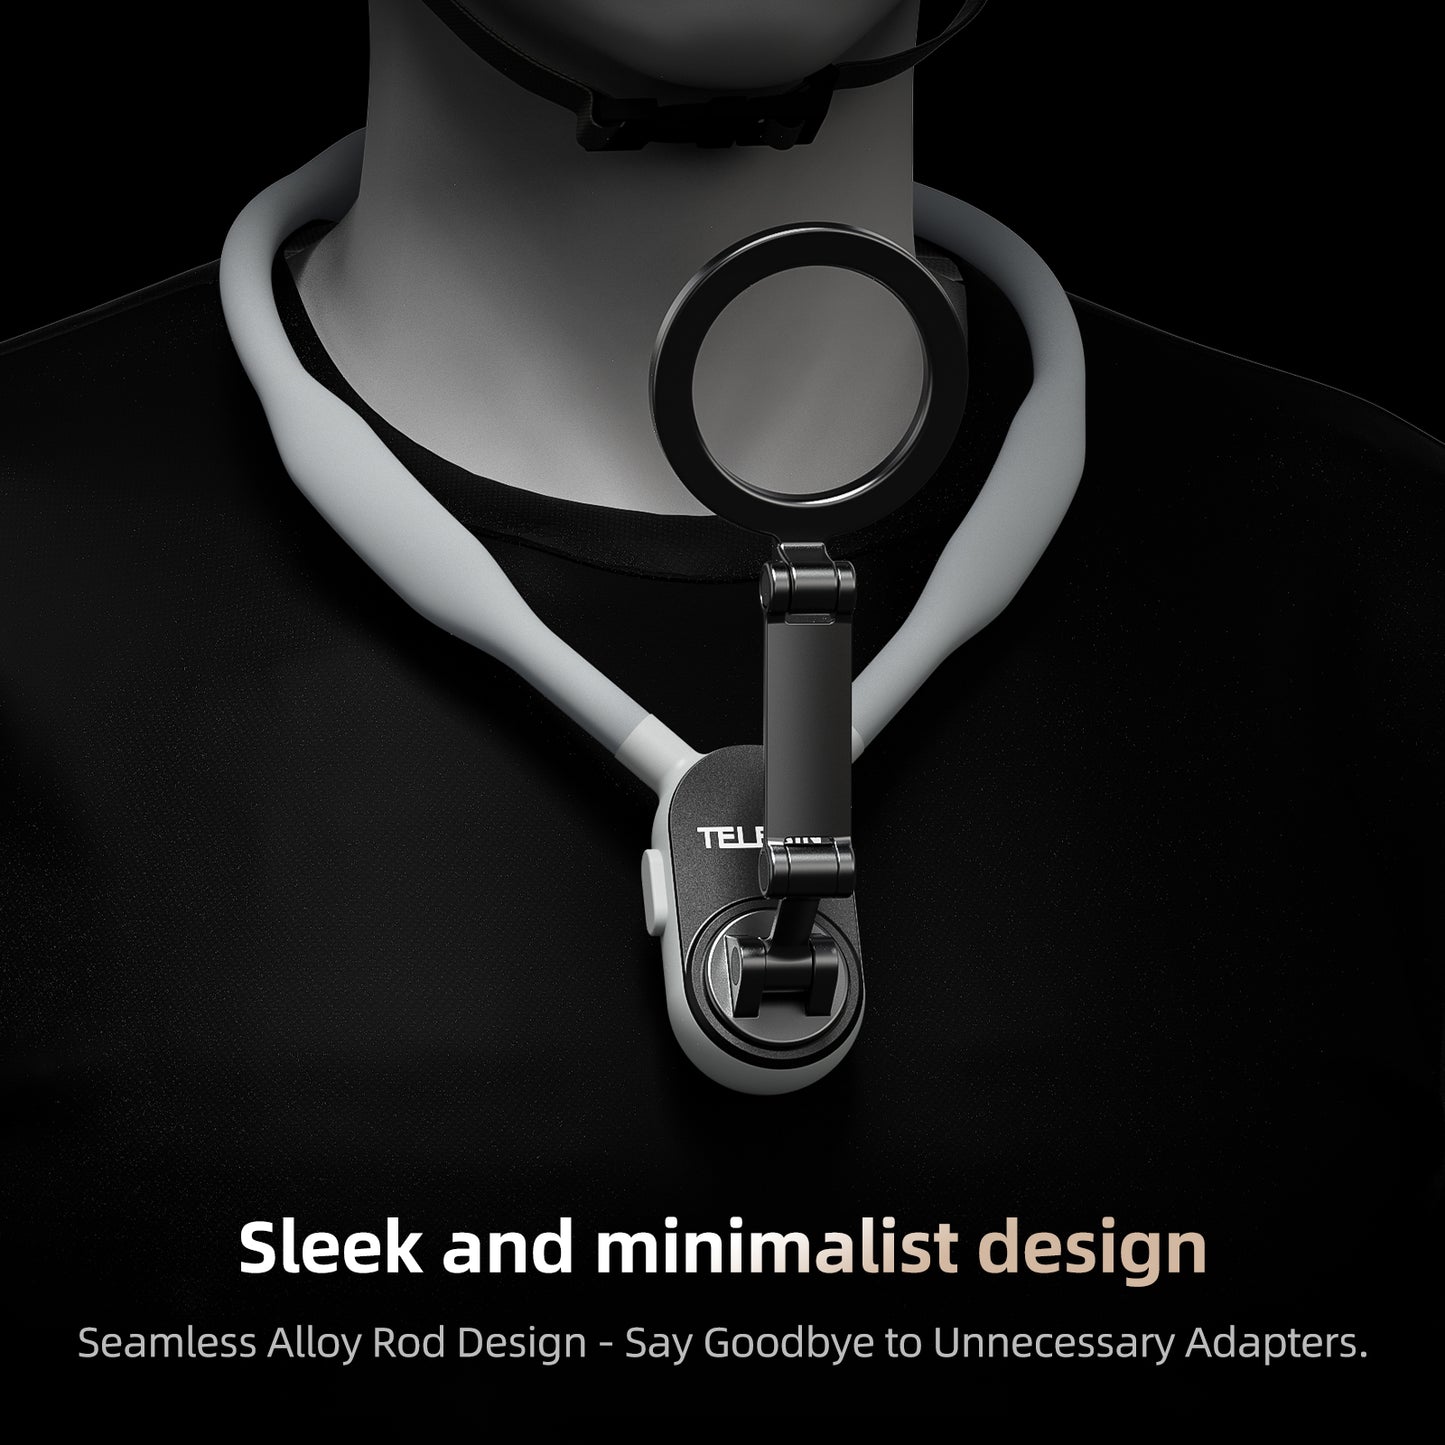 Telesin magnetic neck mount for smartphone